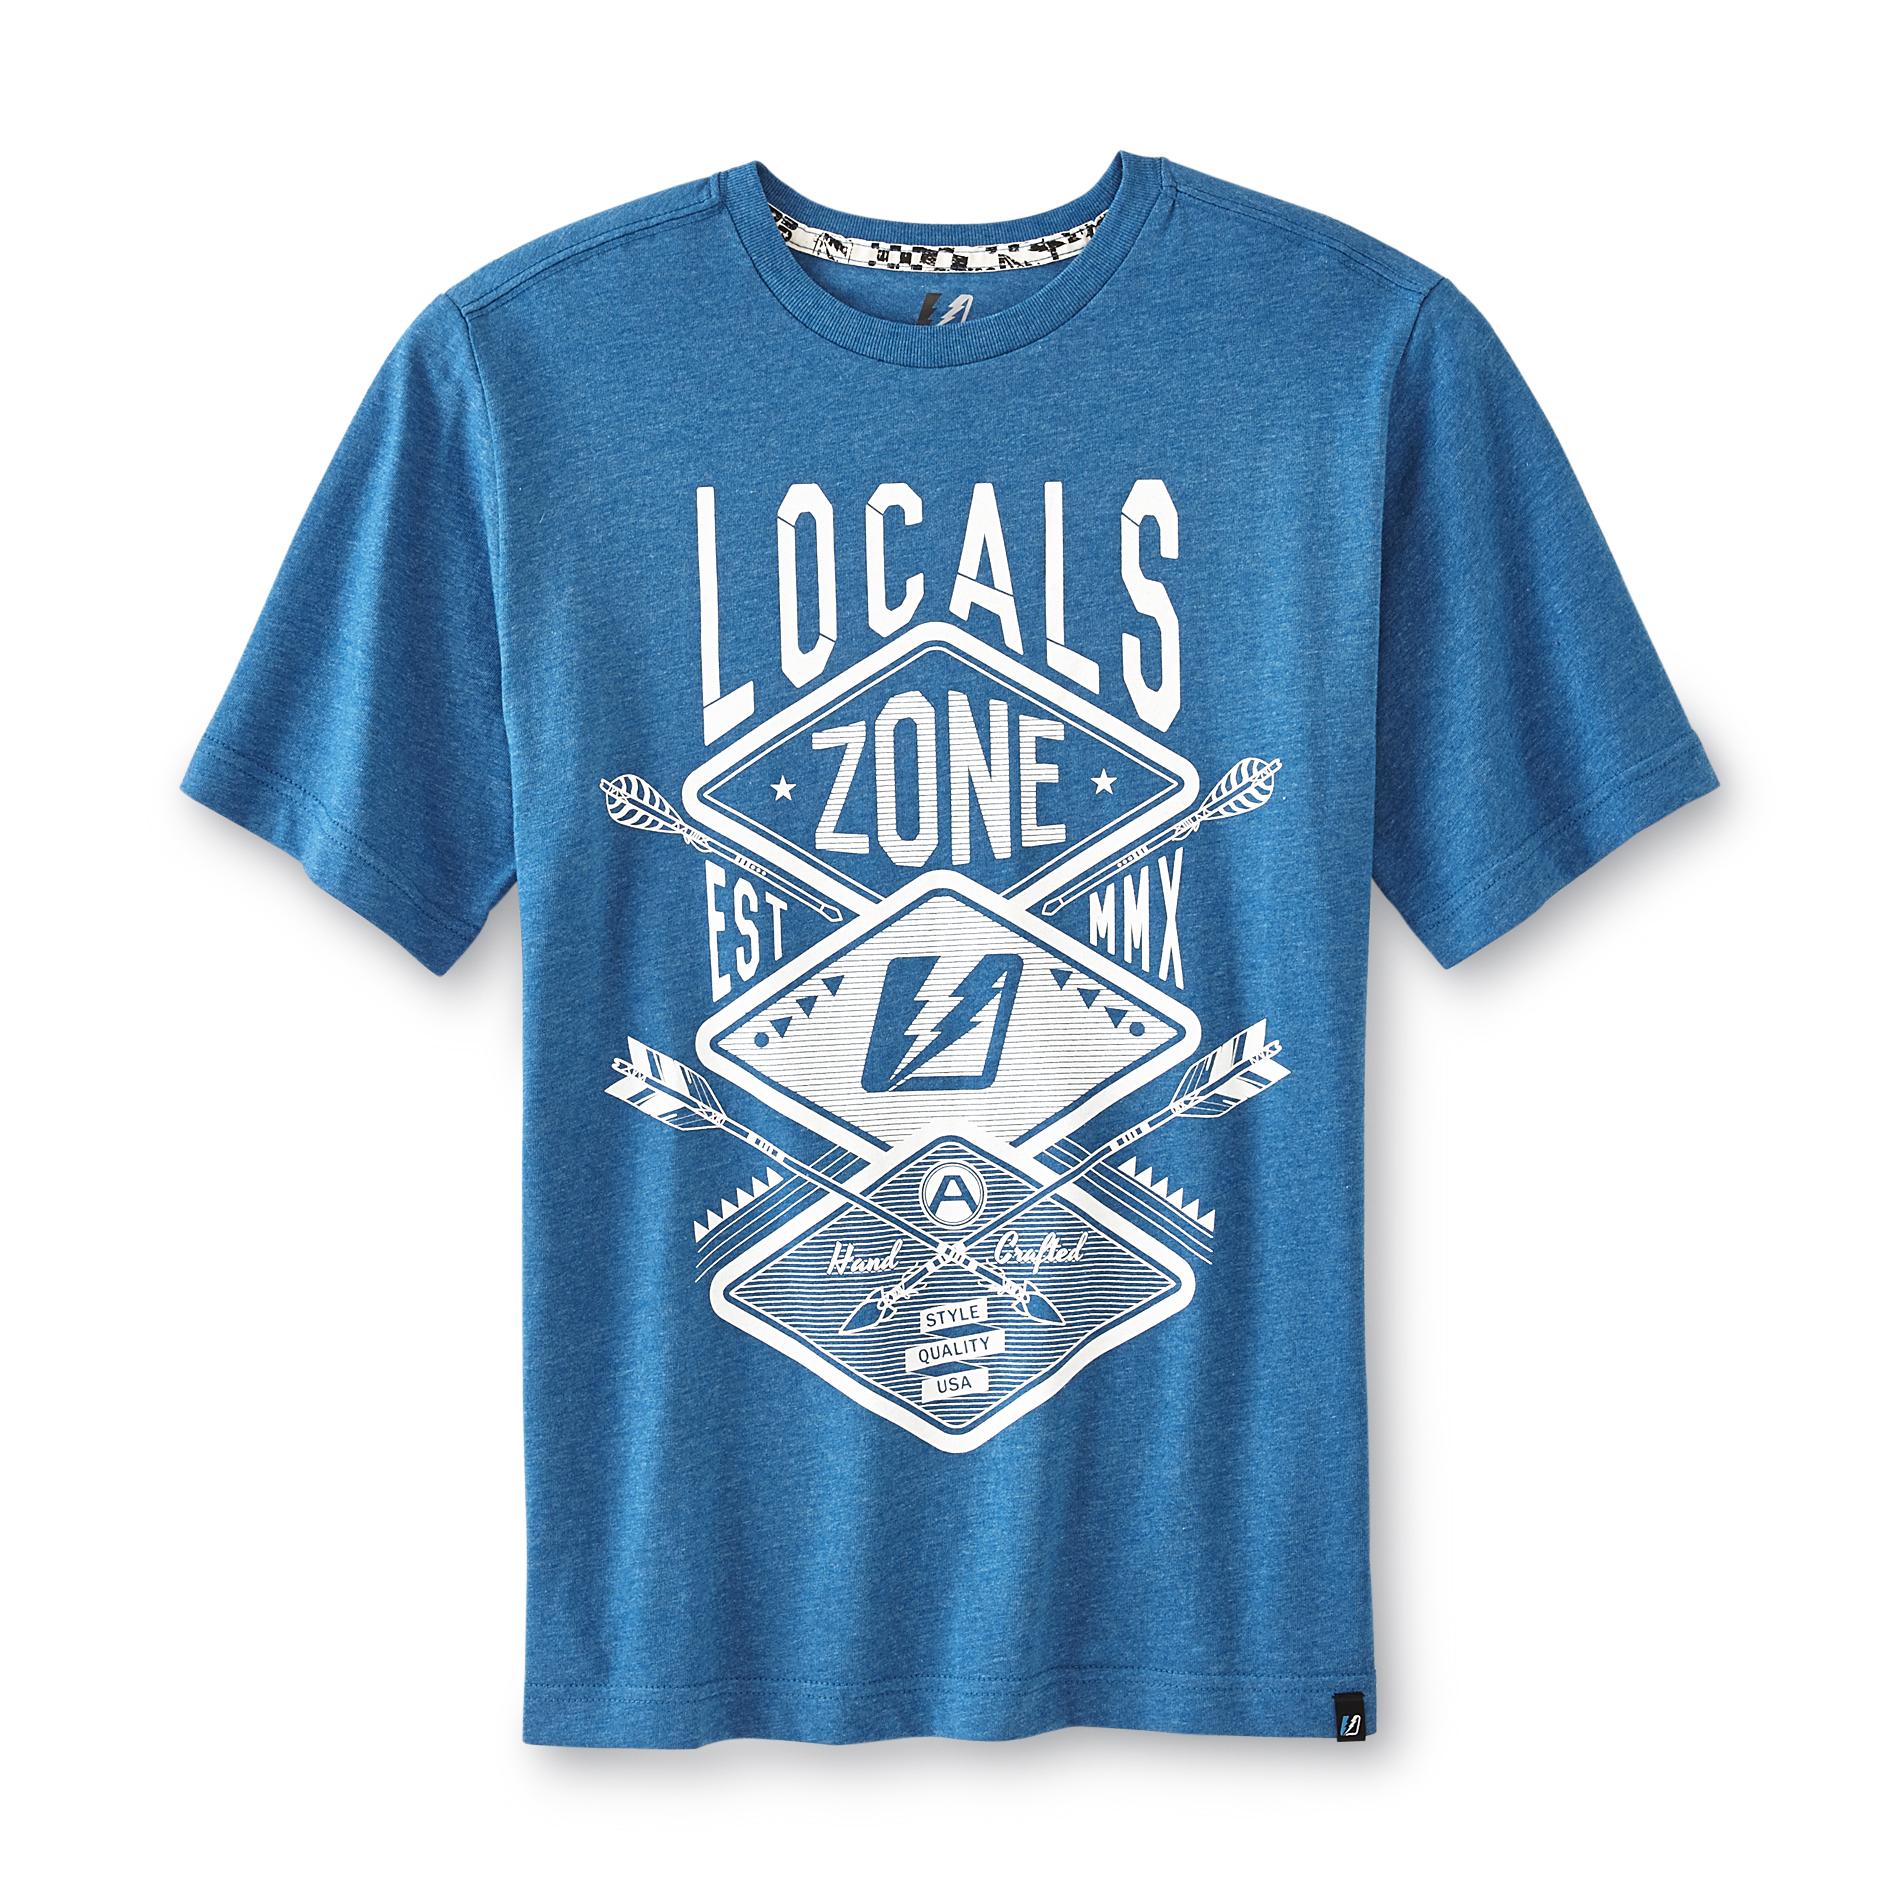 Amplify Boy's Graphic T-Shirt - Locals Zone